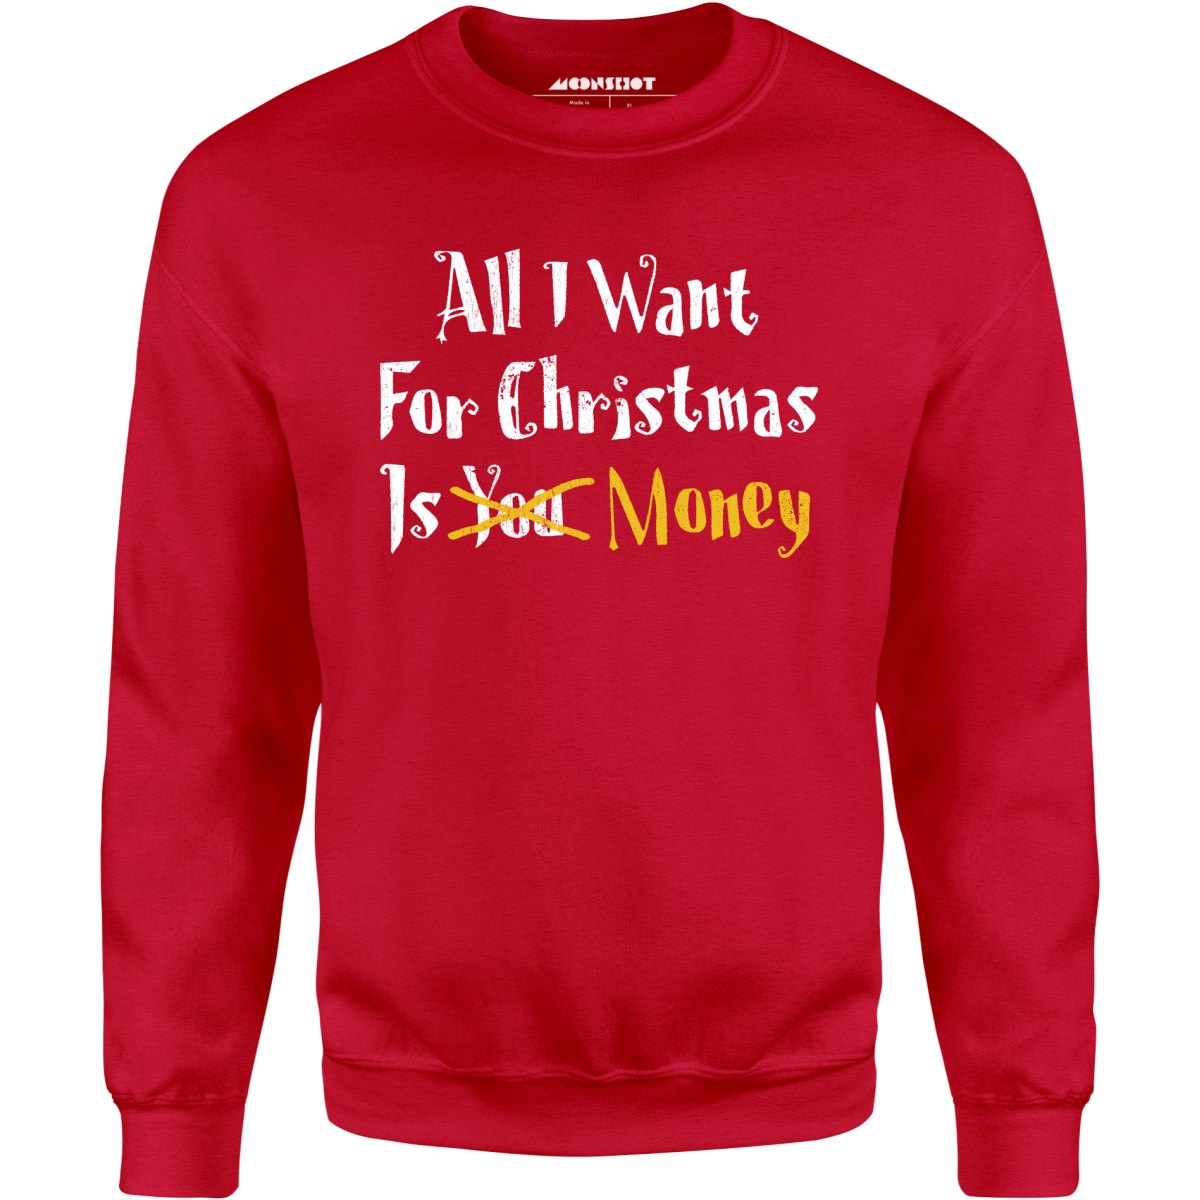 All I Want for Christmas is Money - Unisex Sweatshirt